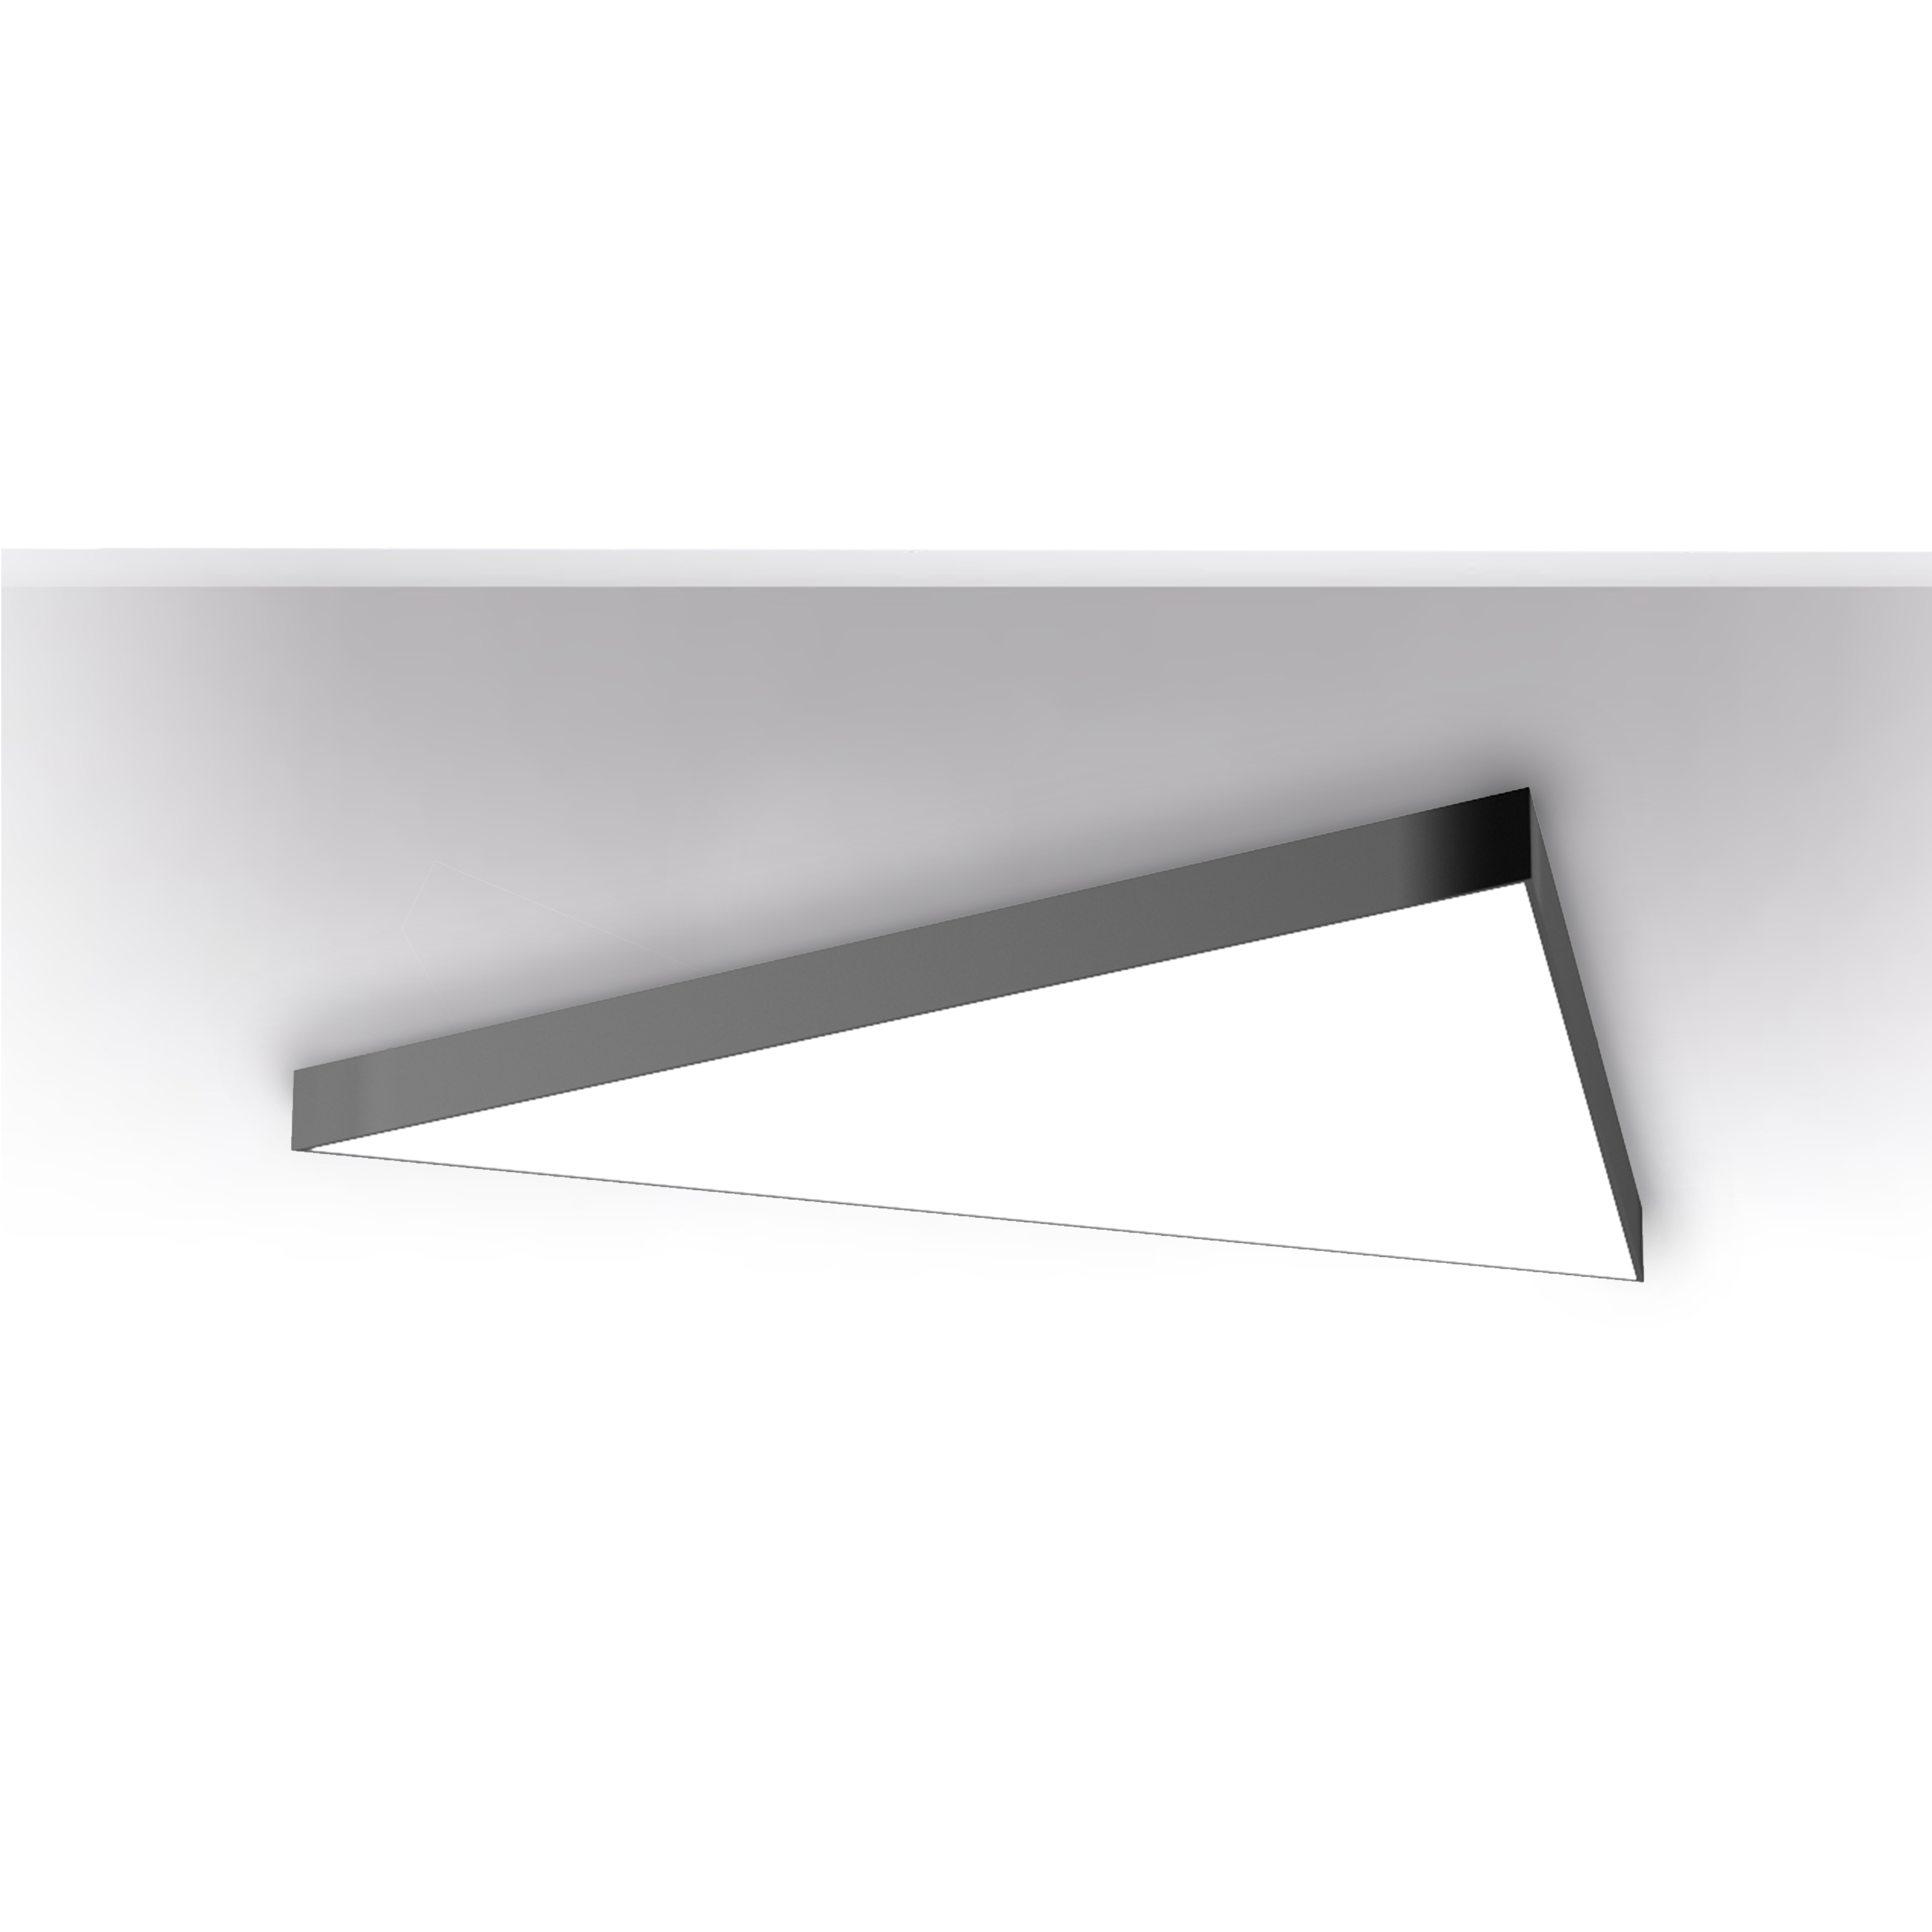 ART-N-TRIANGLE FLEX LED светильник накладной (сплошная засветка)   -  Накладные светильники 